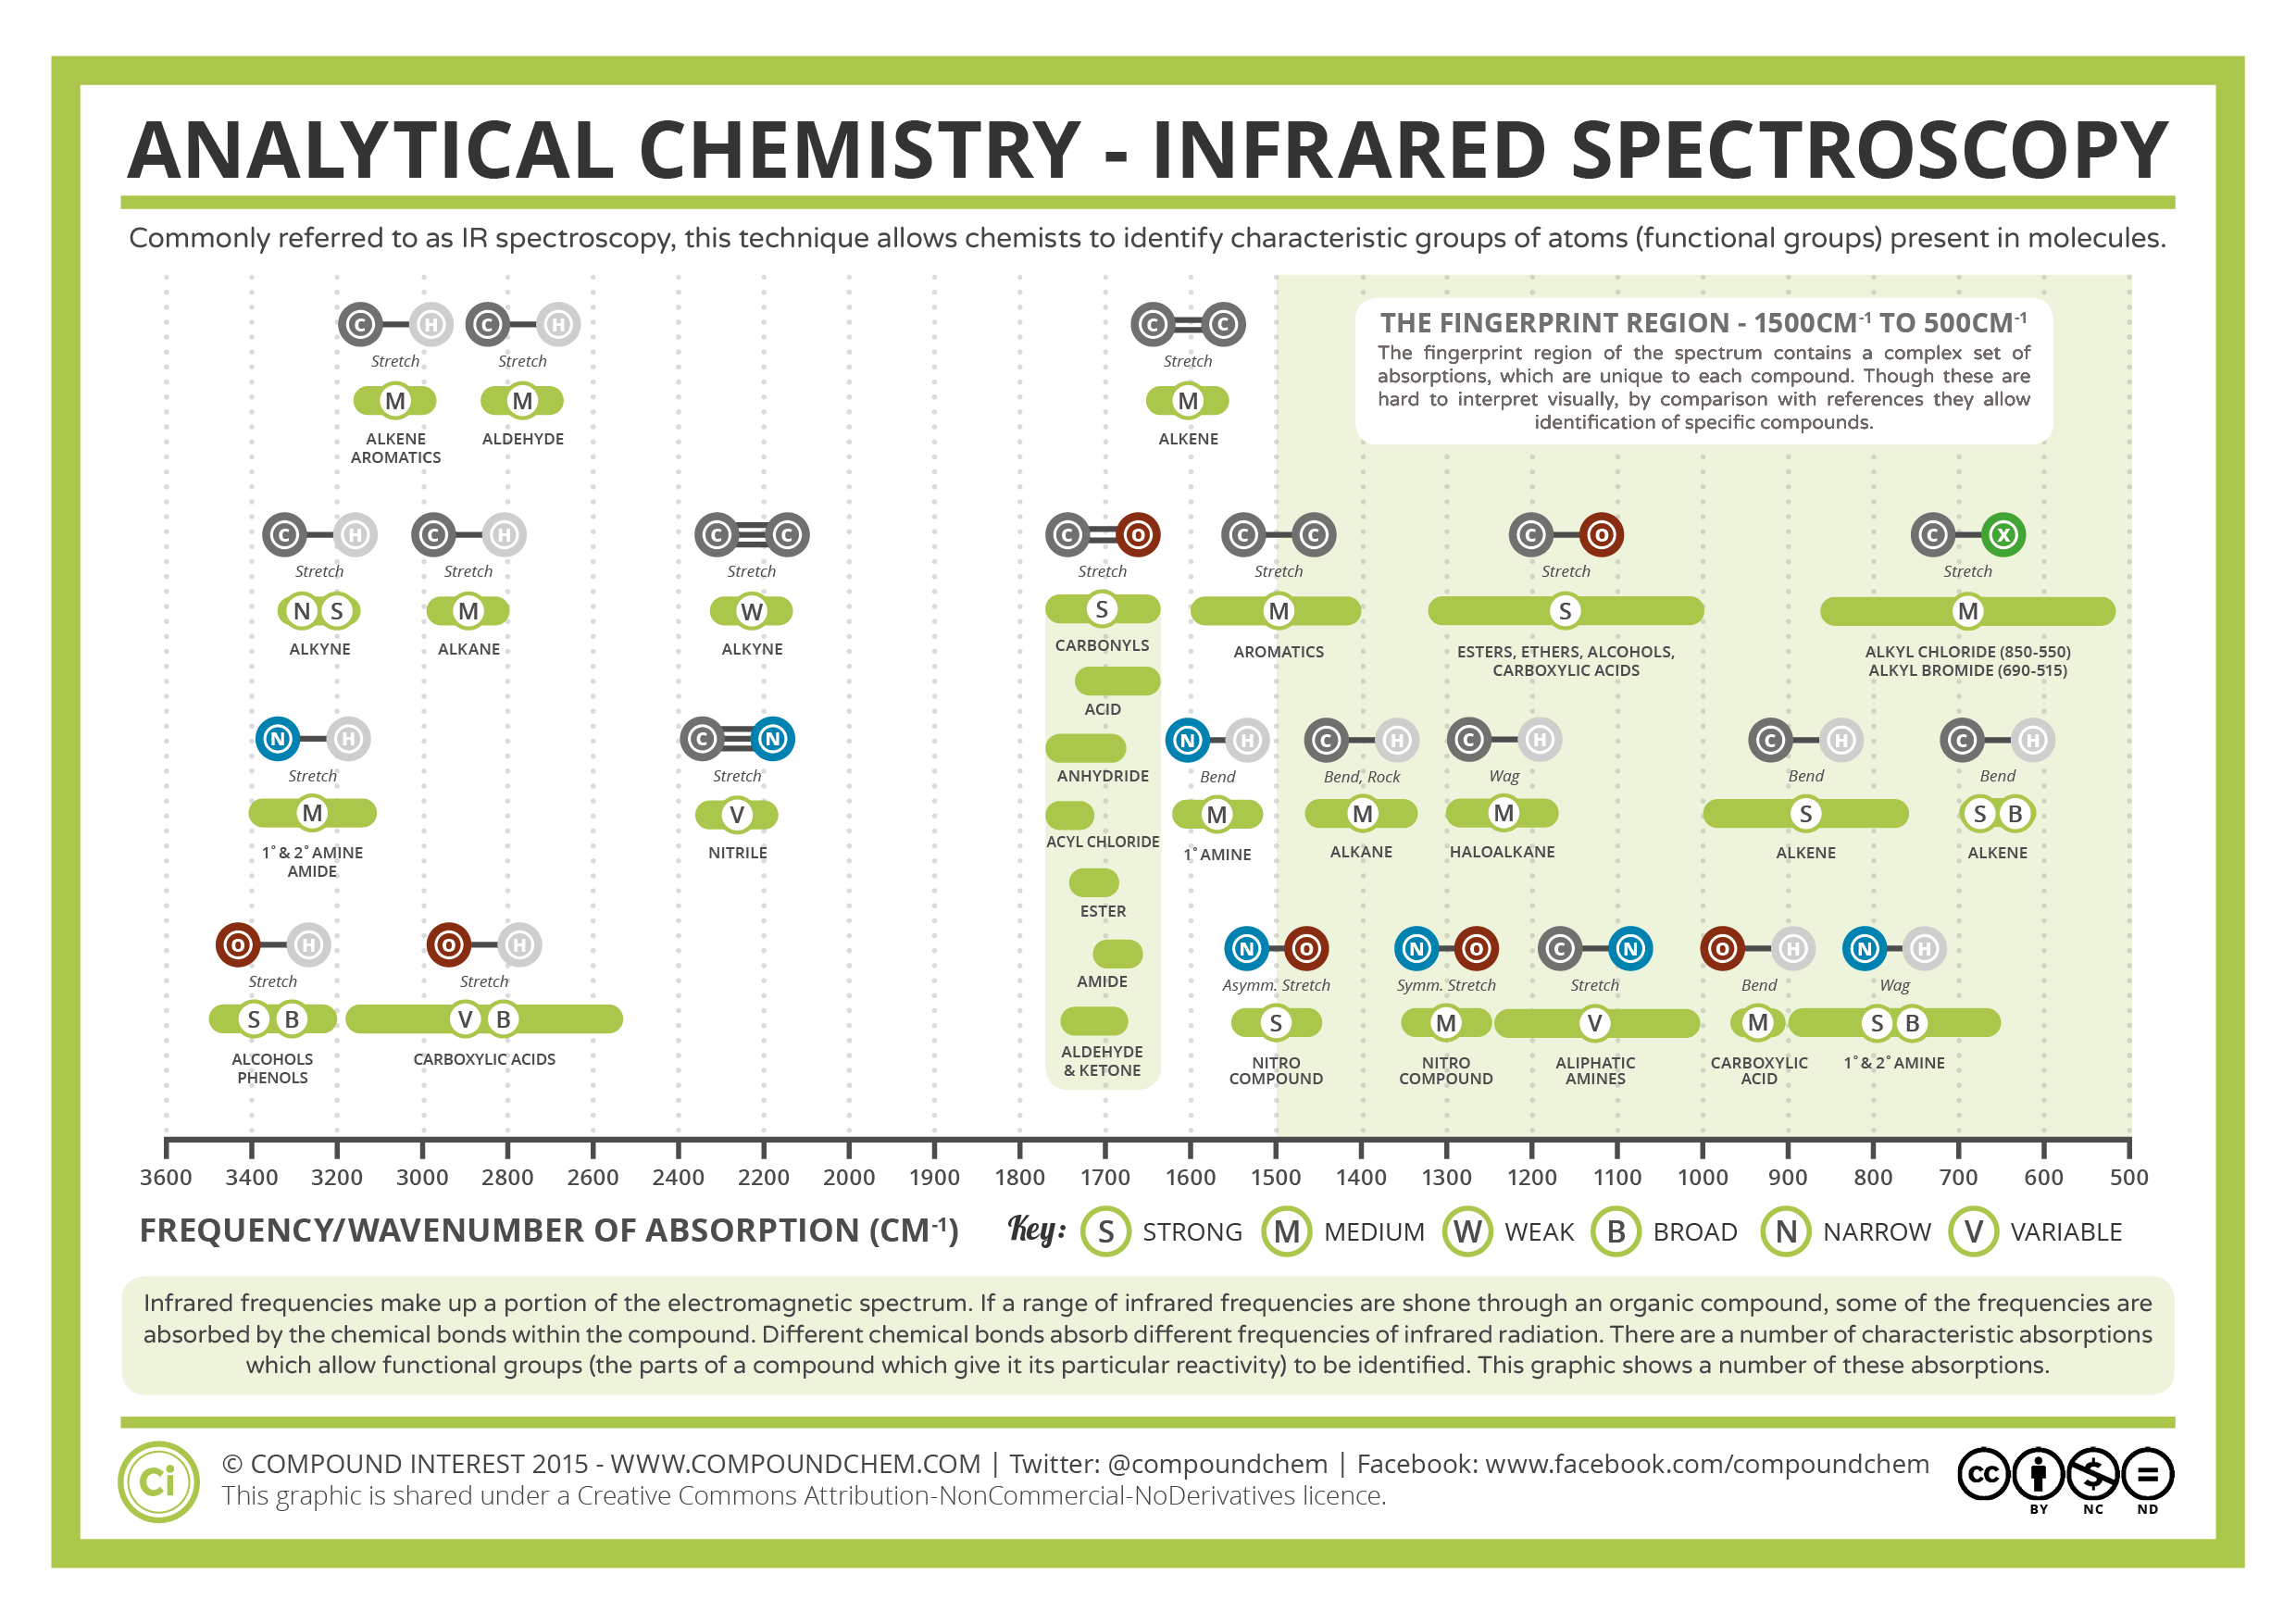 Infrared (IR) Spectroscopy